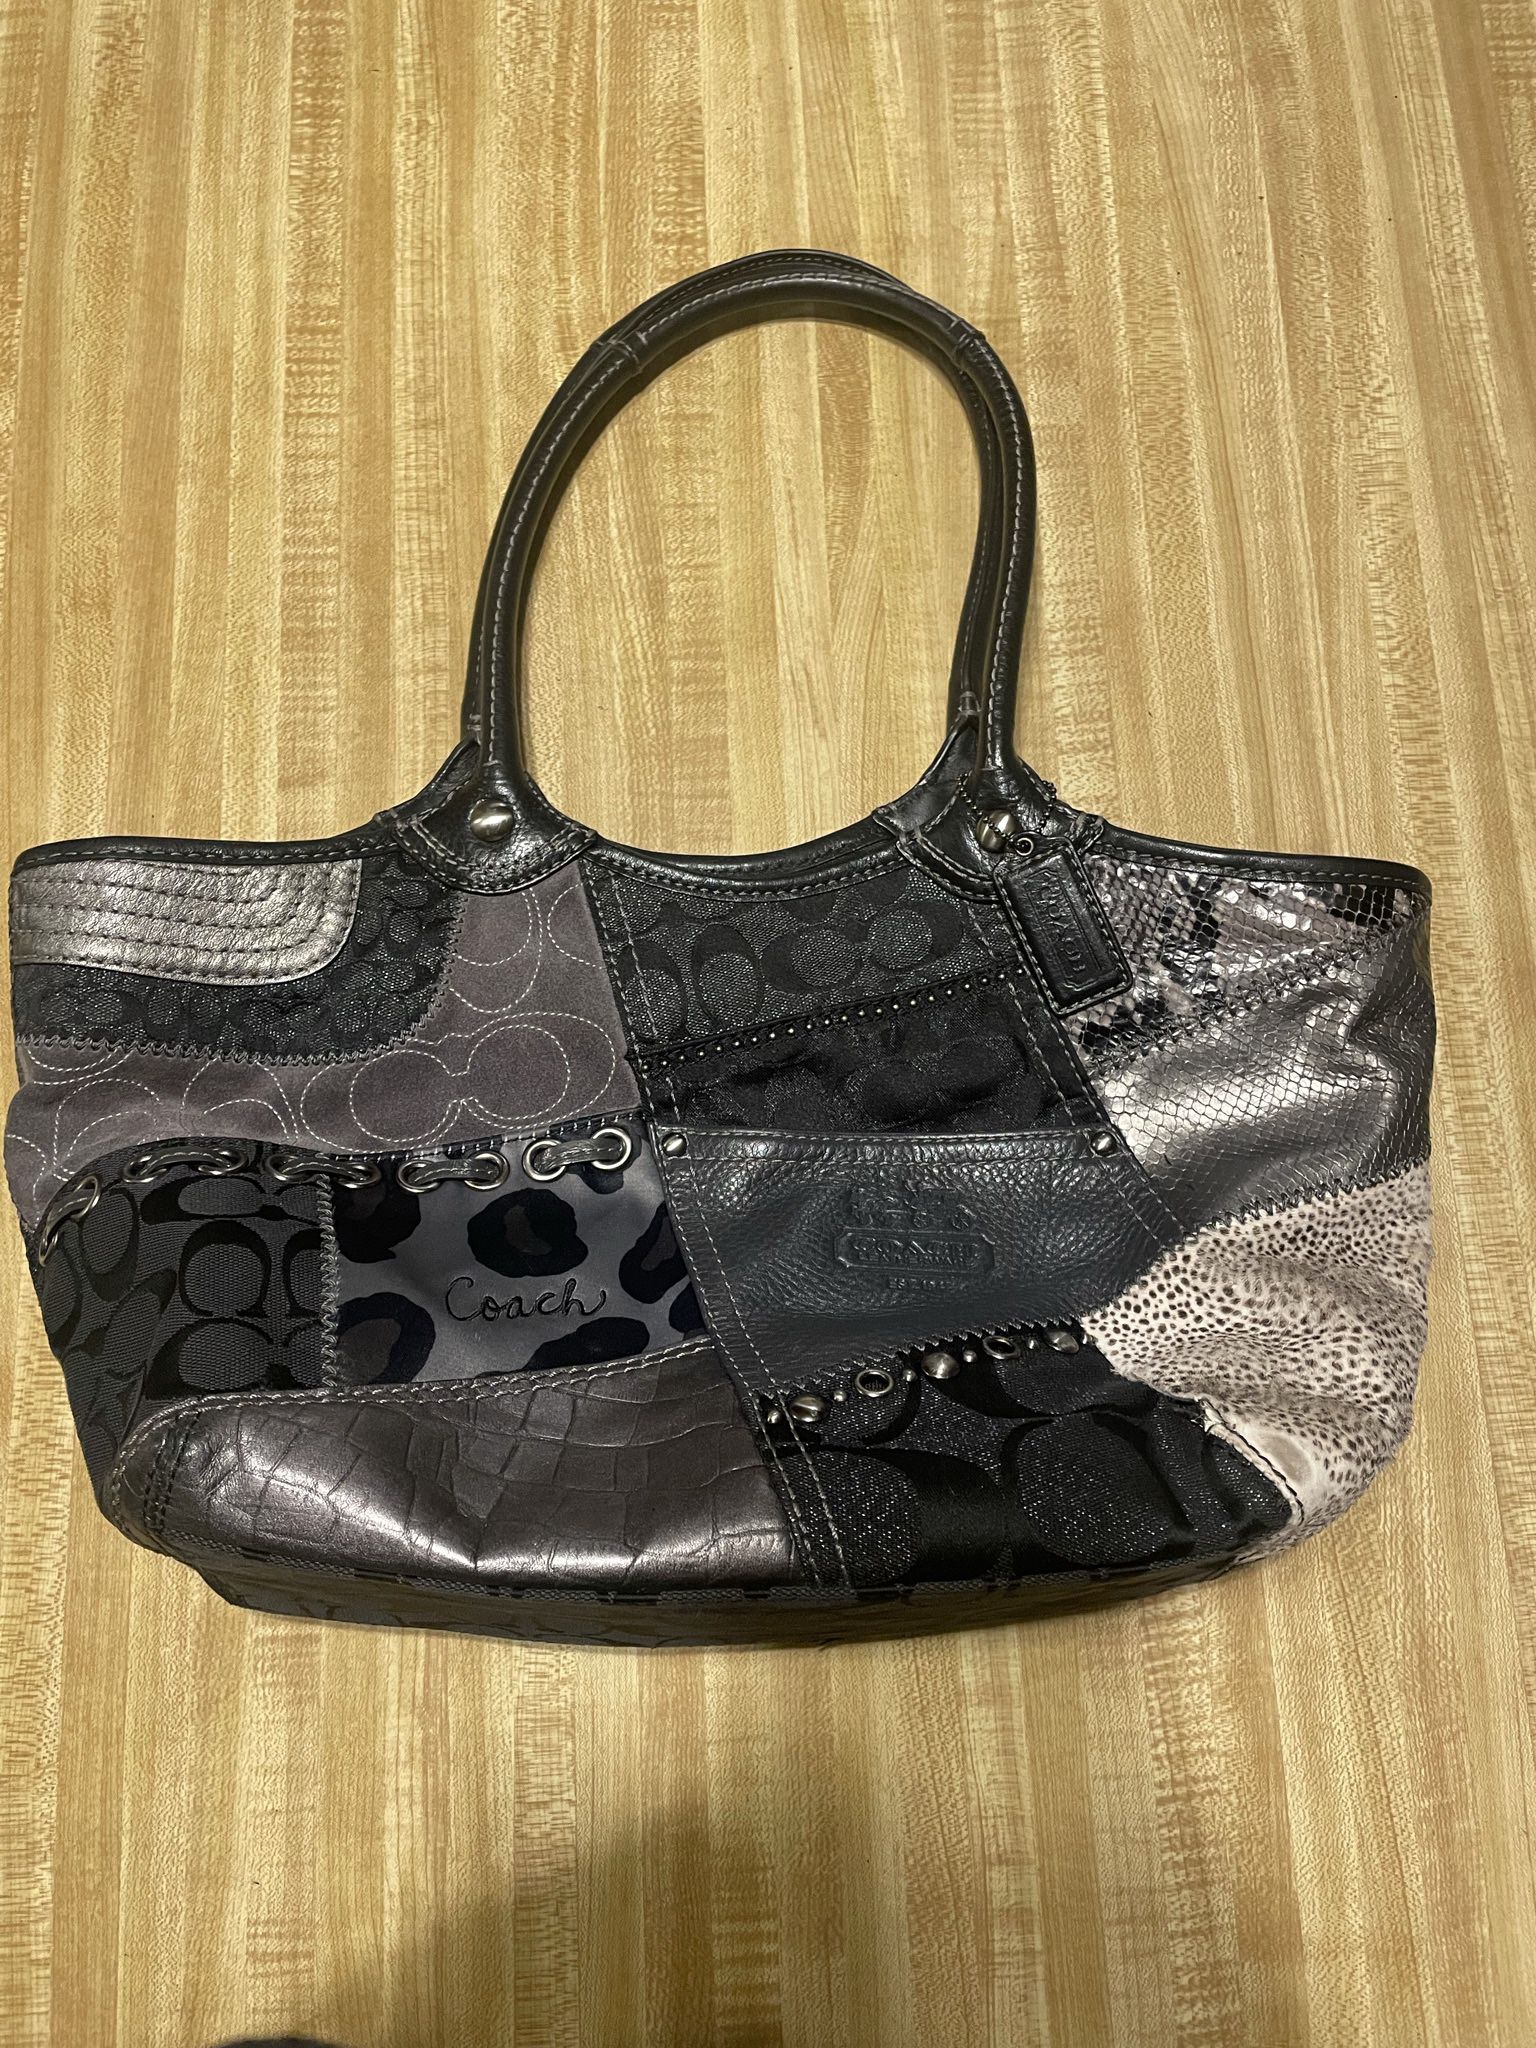 coach Animal Print patchwork Cheetah Snakeskin Black Leather Tote Bag Purse